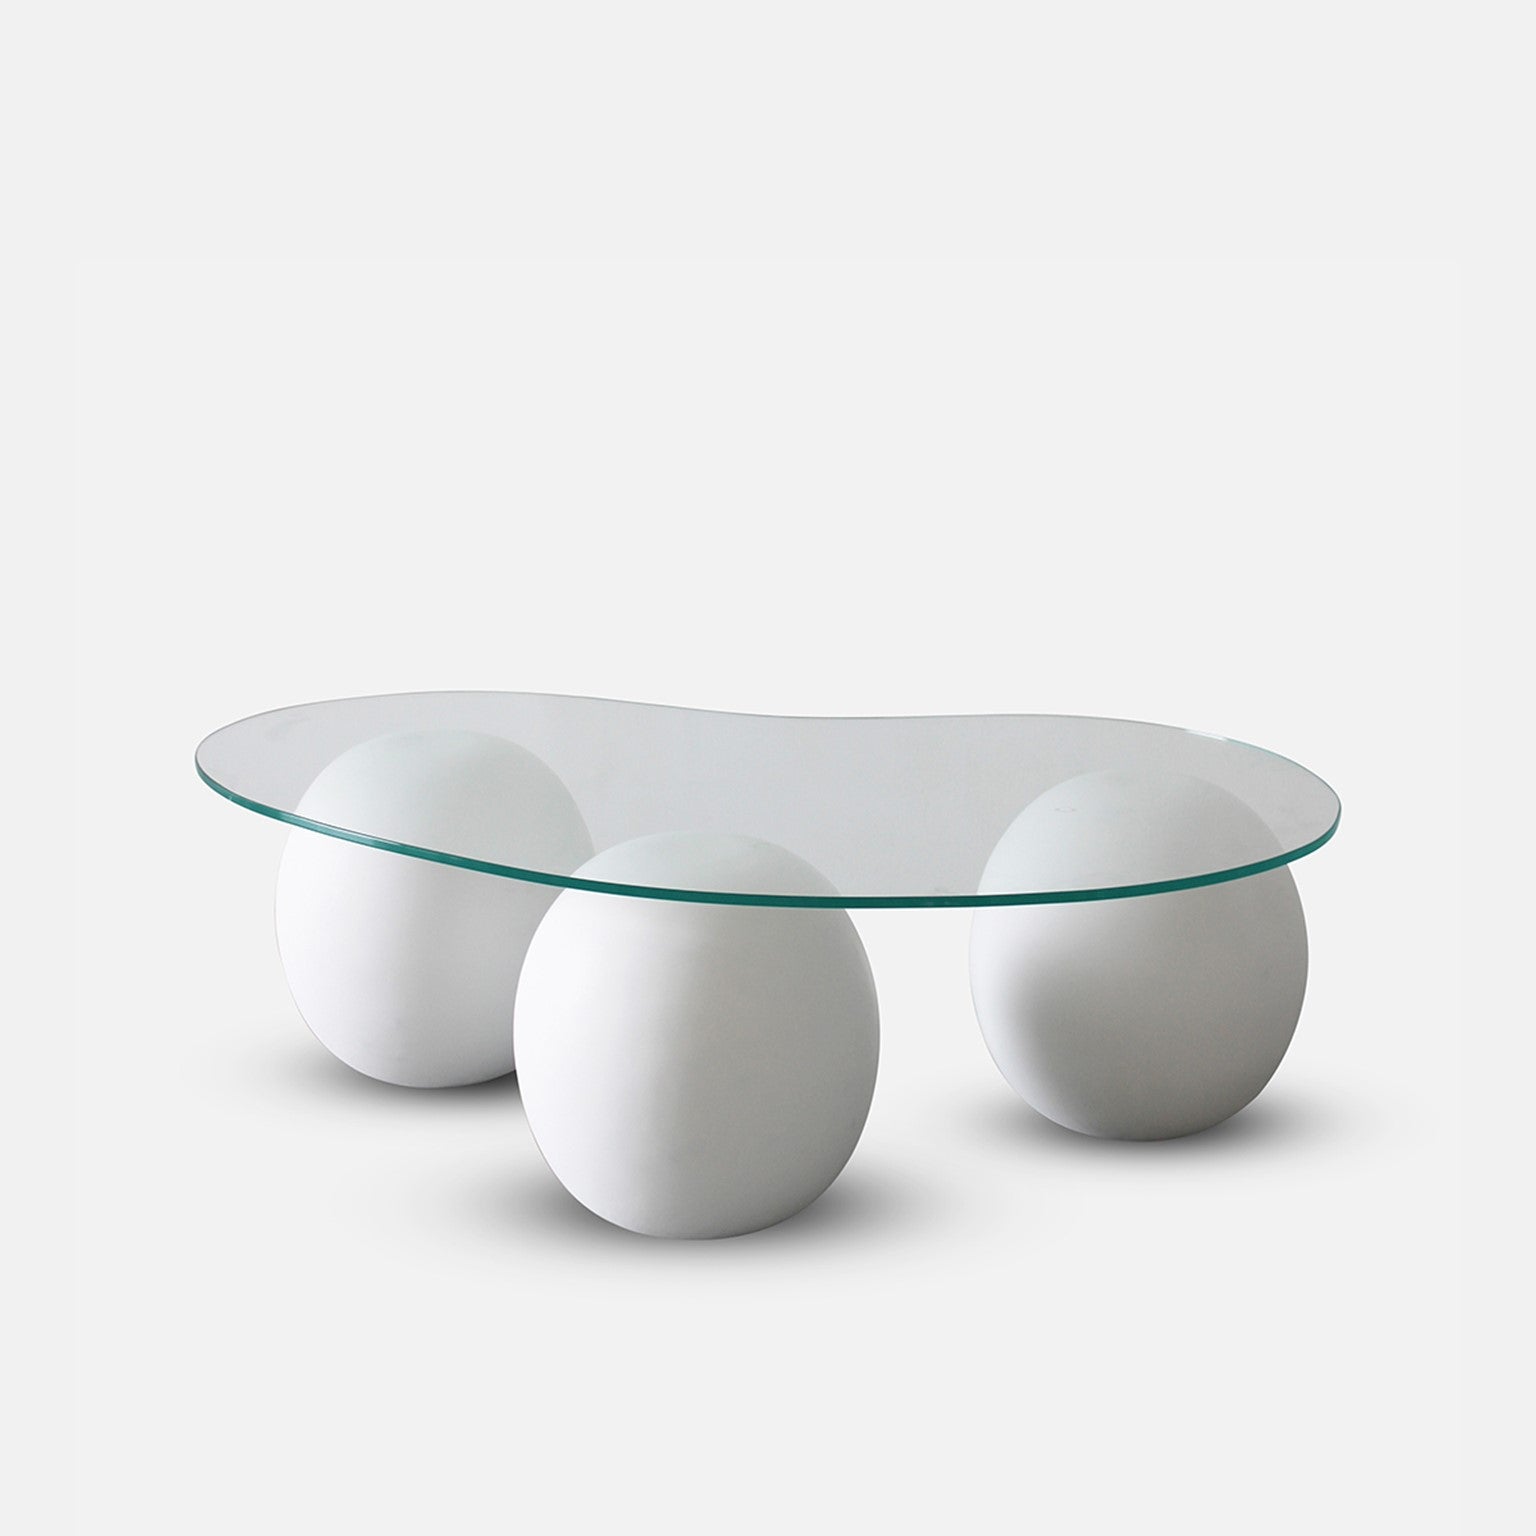 3 Balls Coffee Table - Glass Top